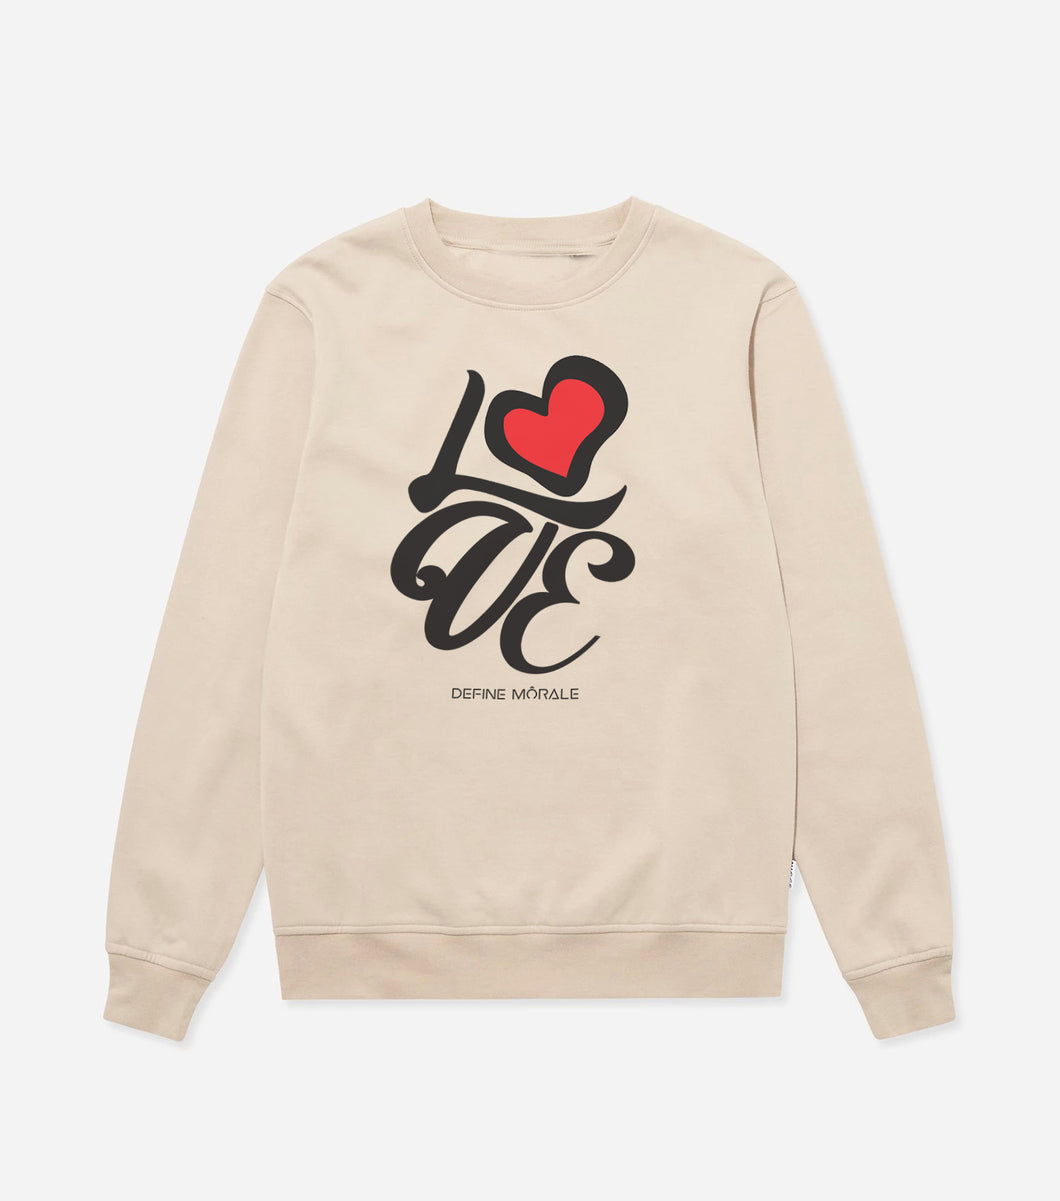 Love Formation - (Sand) Unisex Sweatshirt